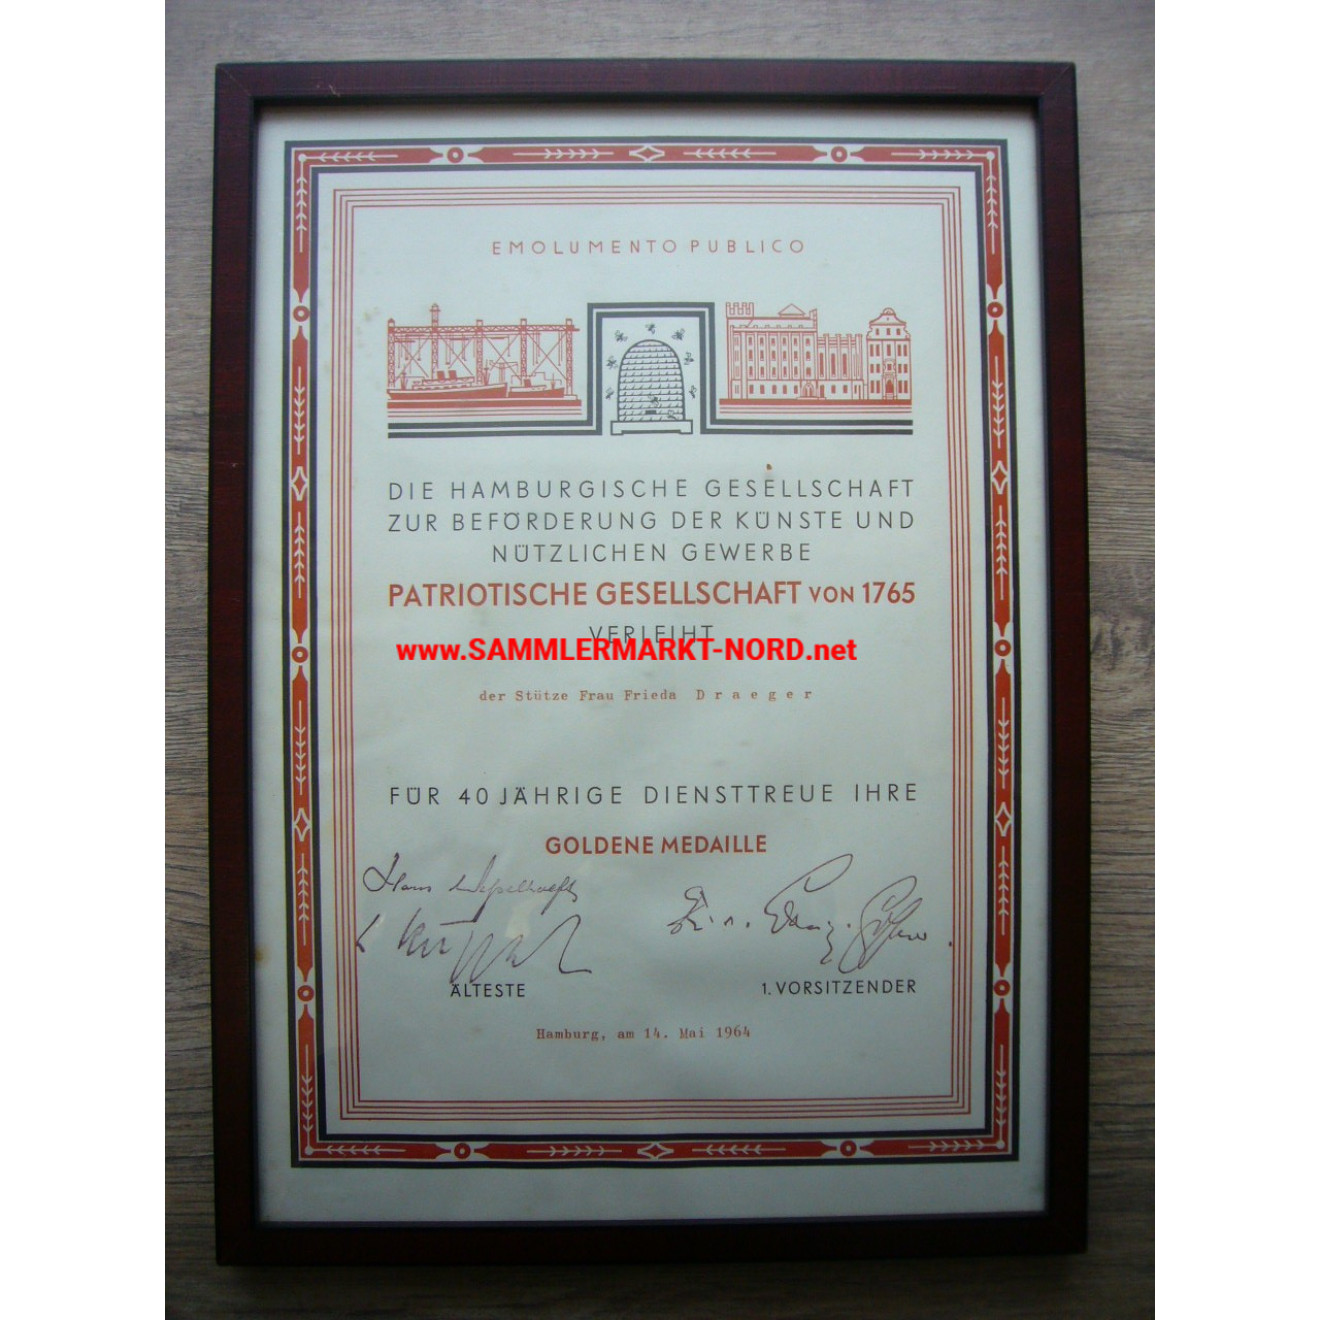 Patriotic Society of 1765 (Hamburg) - Certificate for the Golden Medal 1964